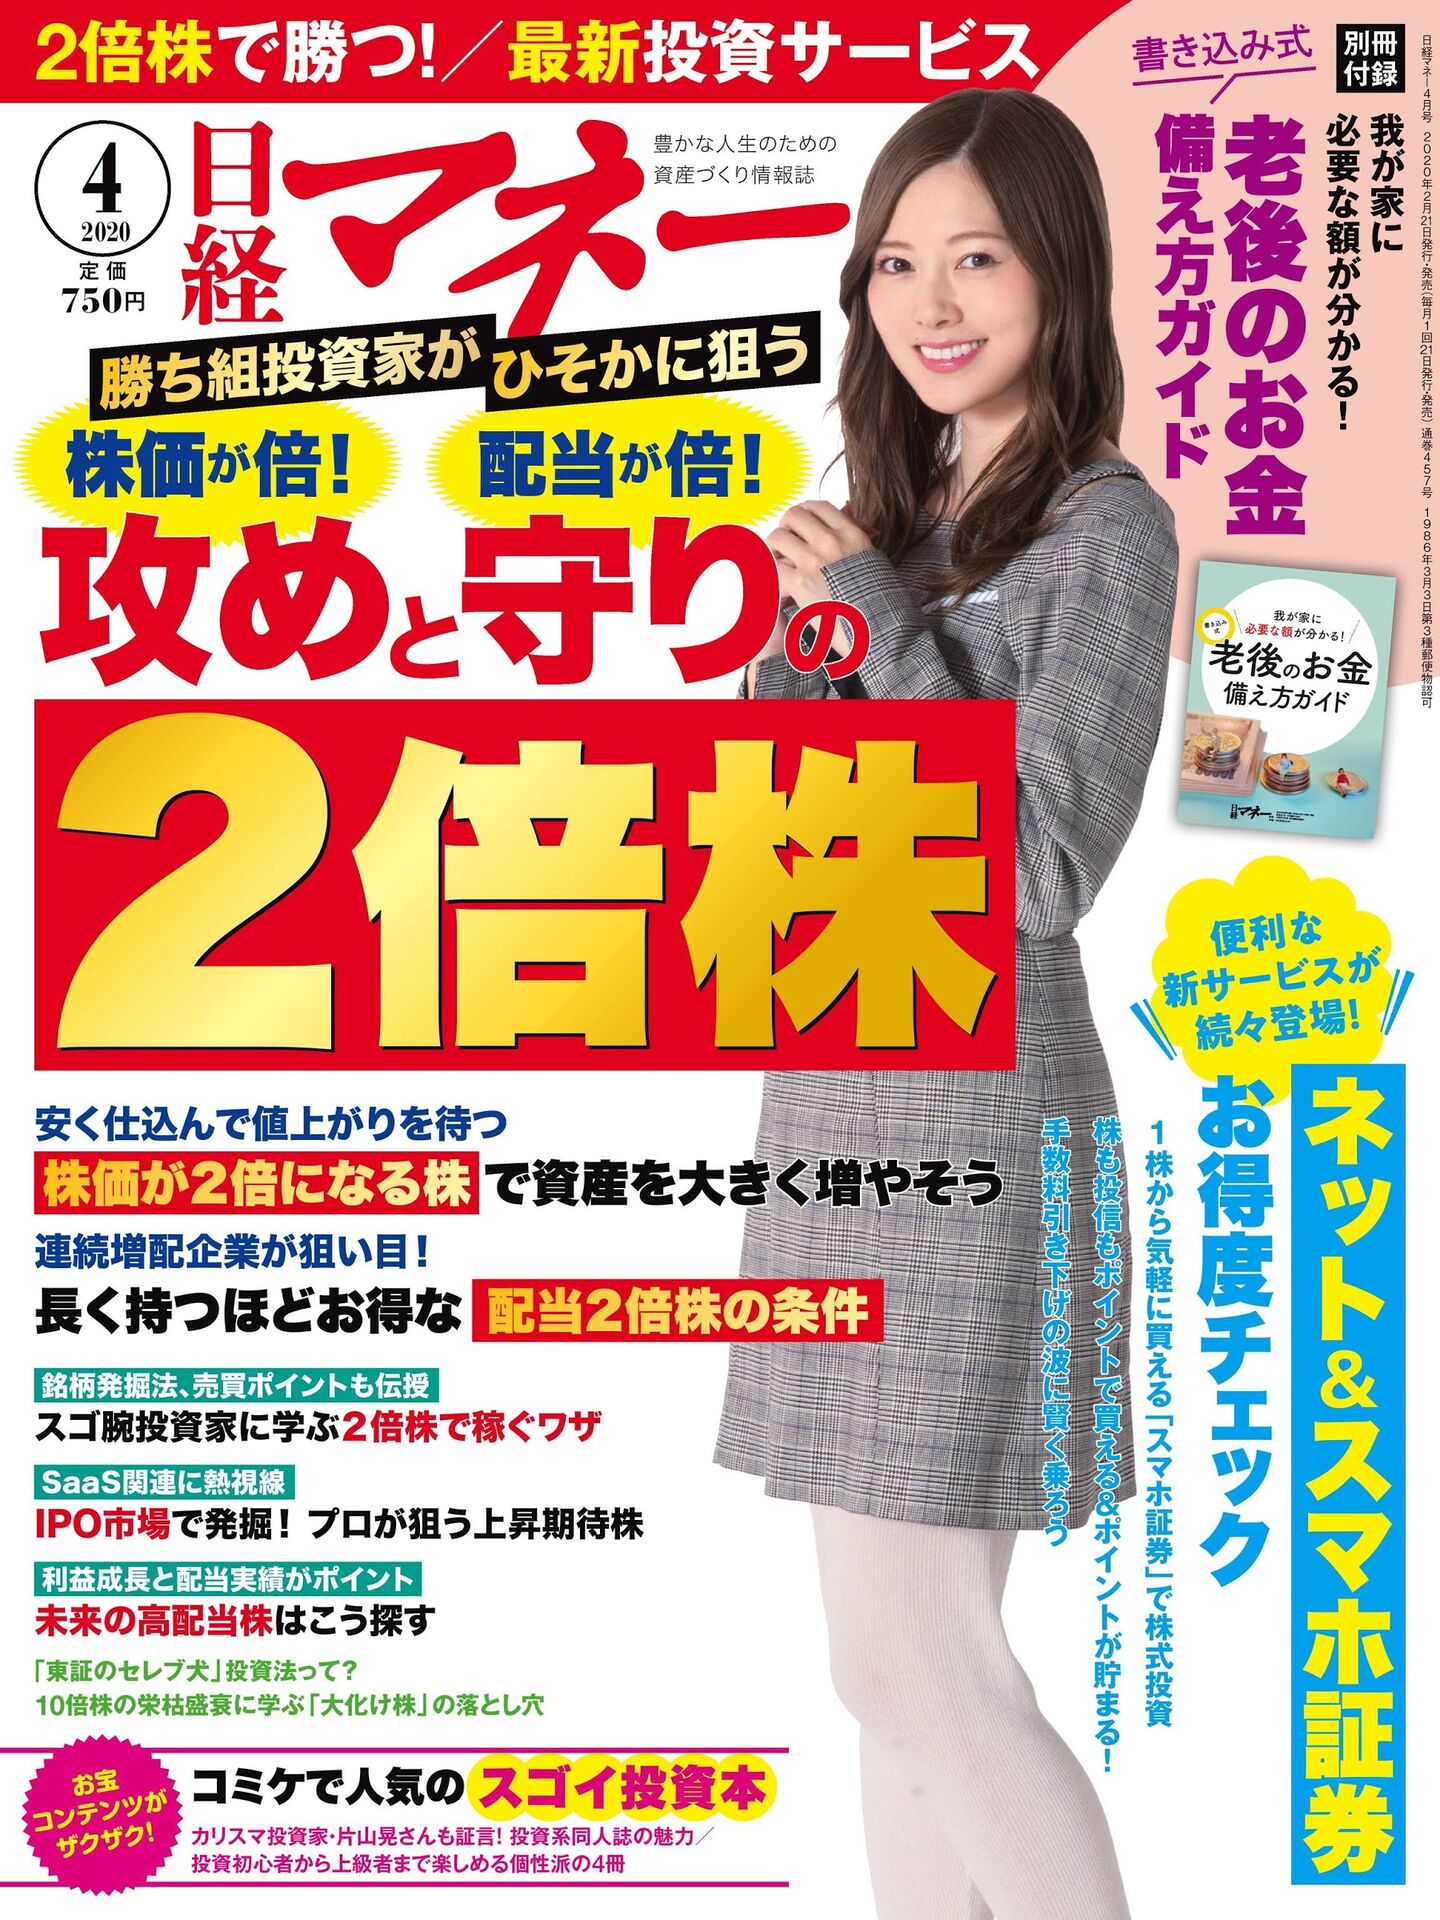 Mai Shiraishi 白石麻衣, FLASH 2020.11.10 (フラッシュ 2020年11月10日号)